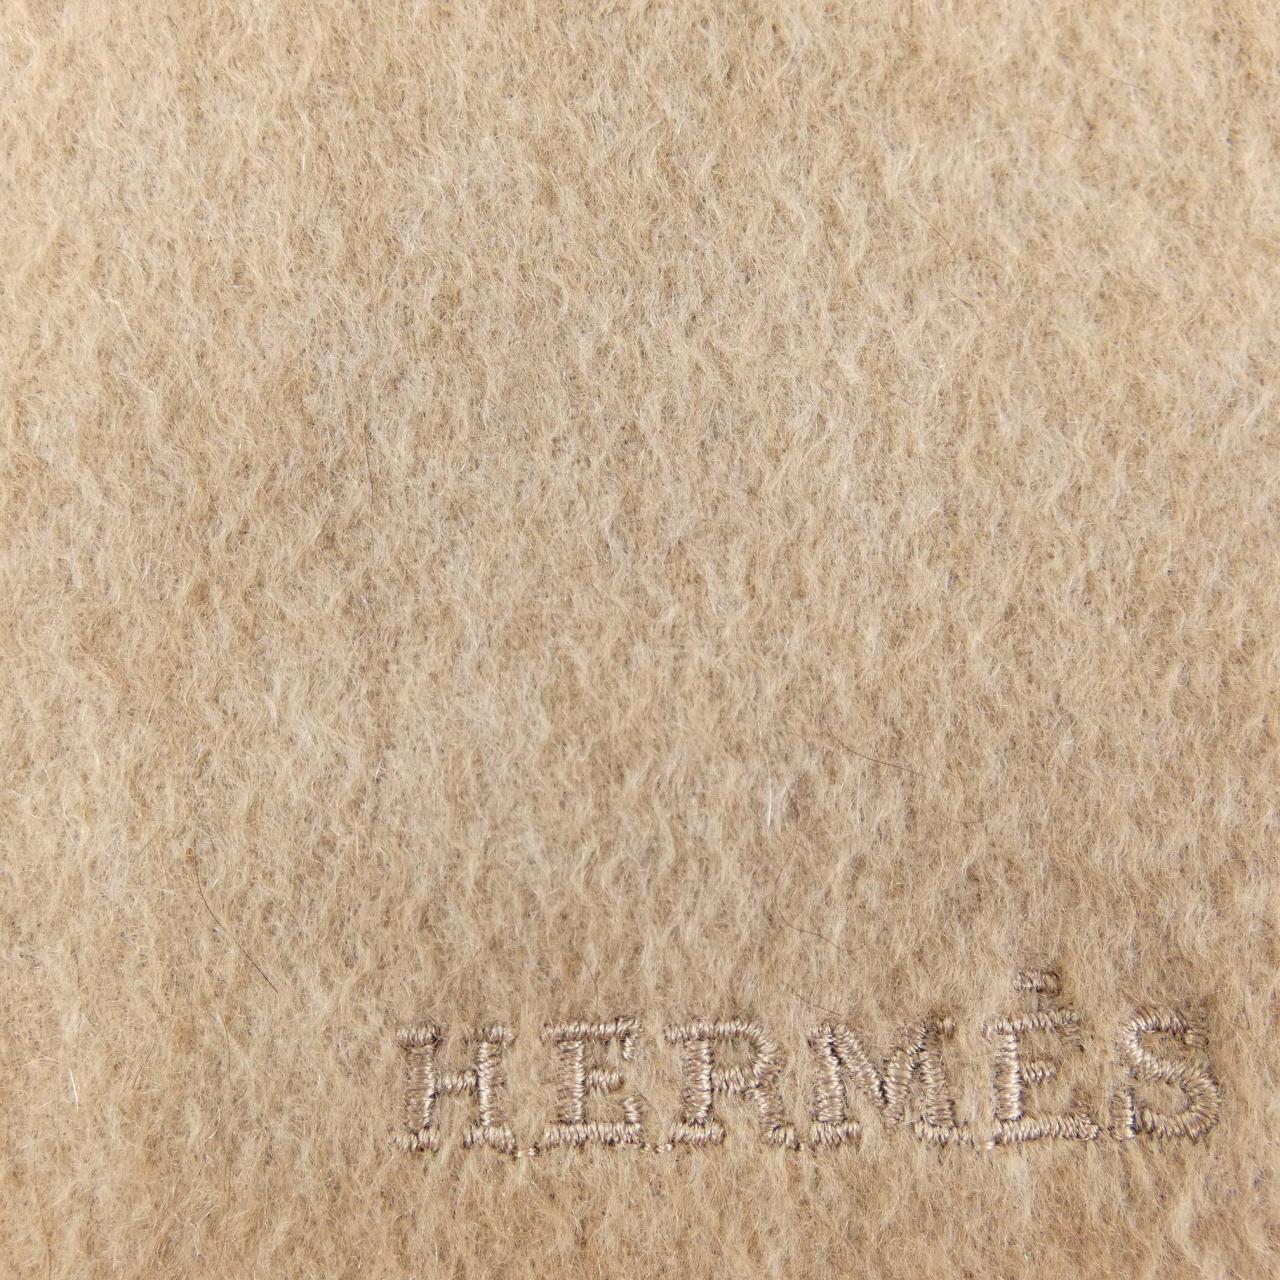 HERMES围巾